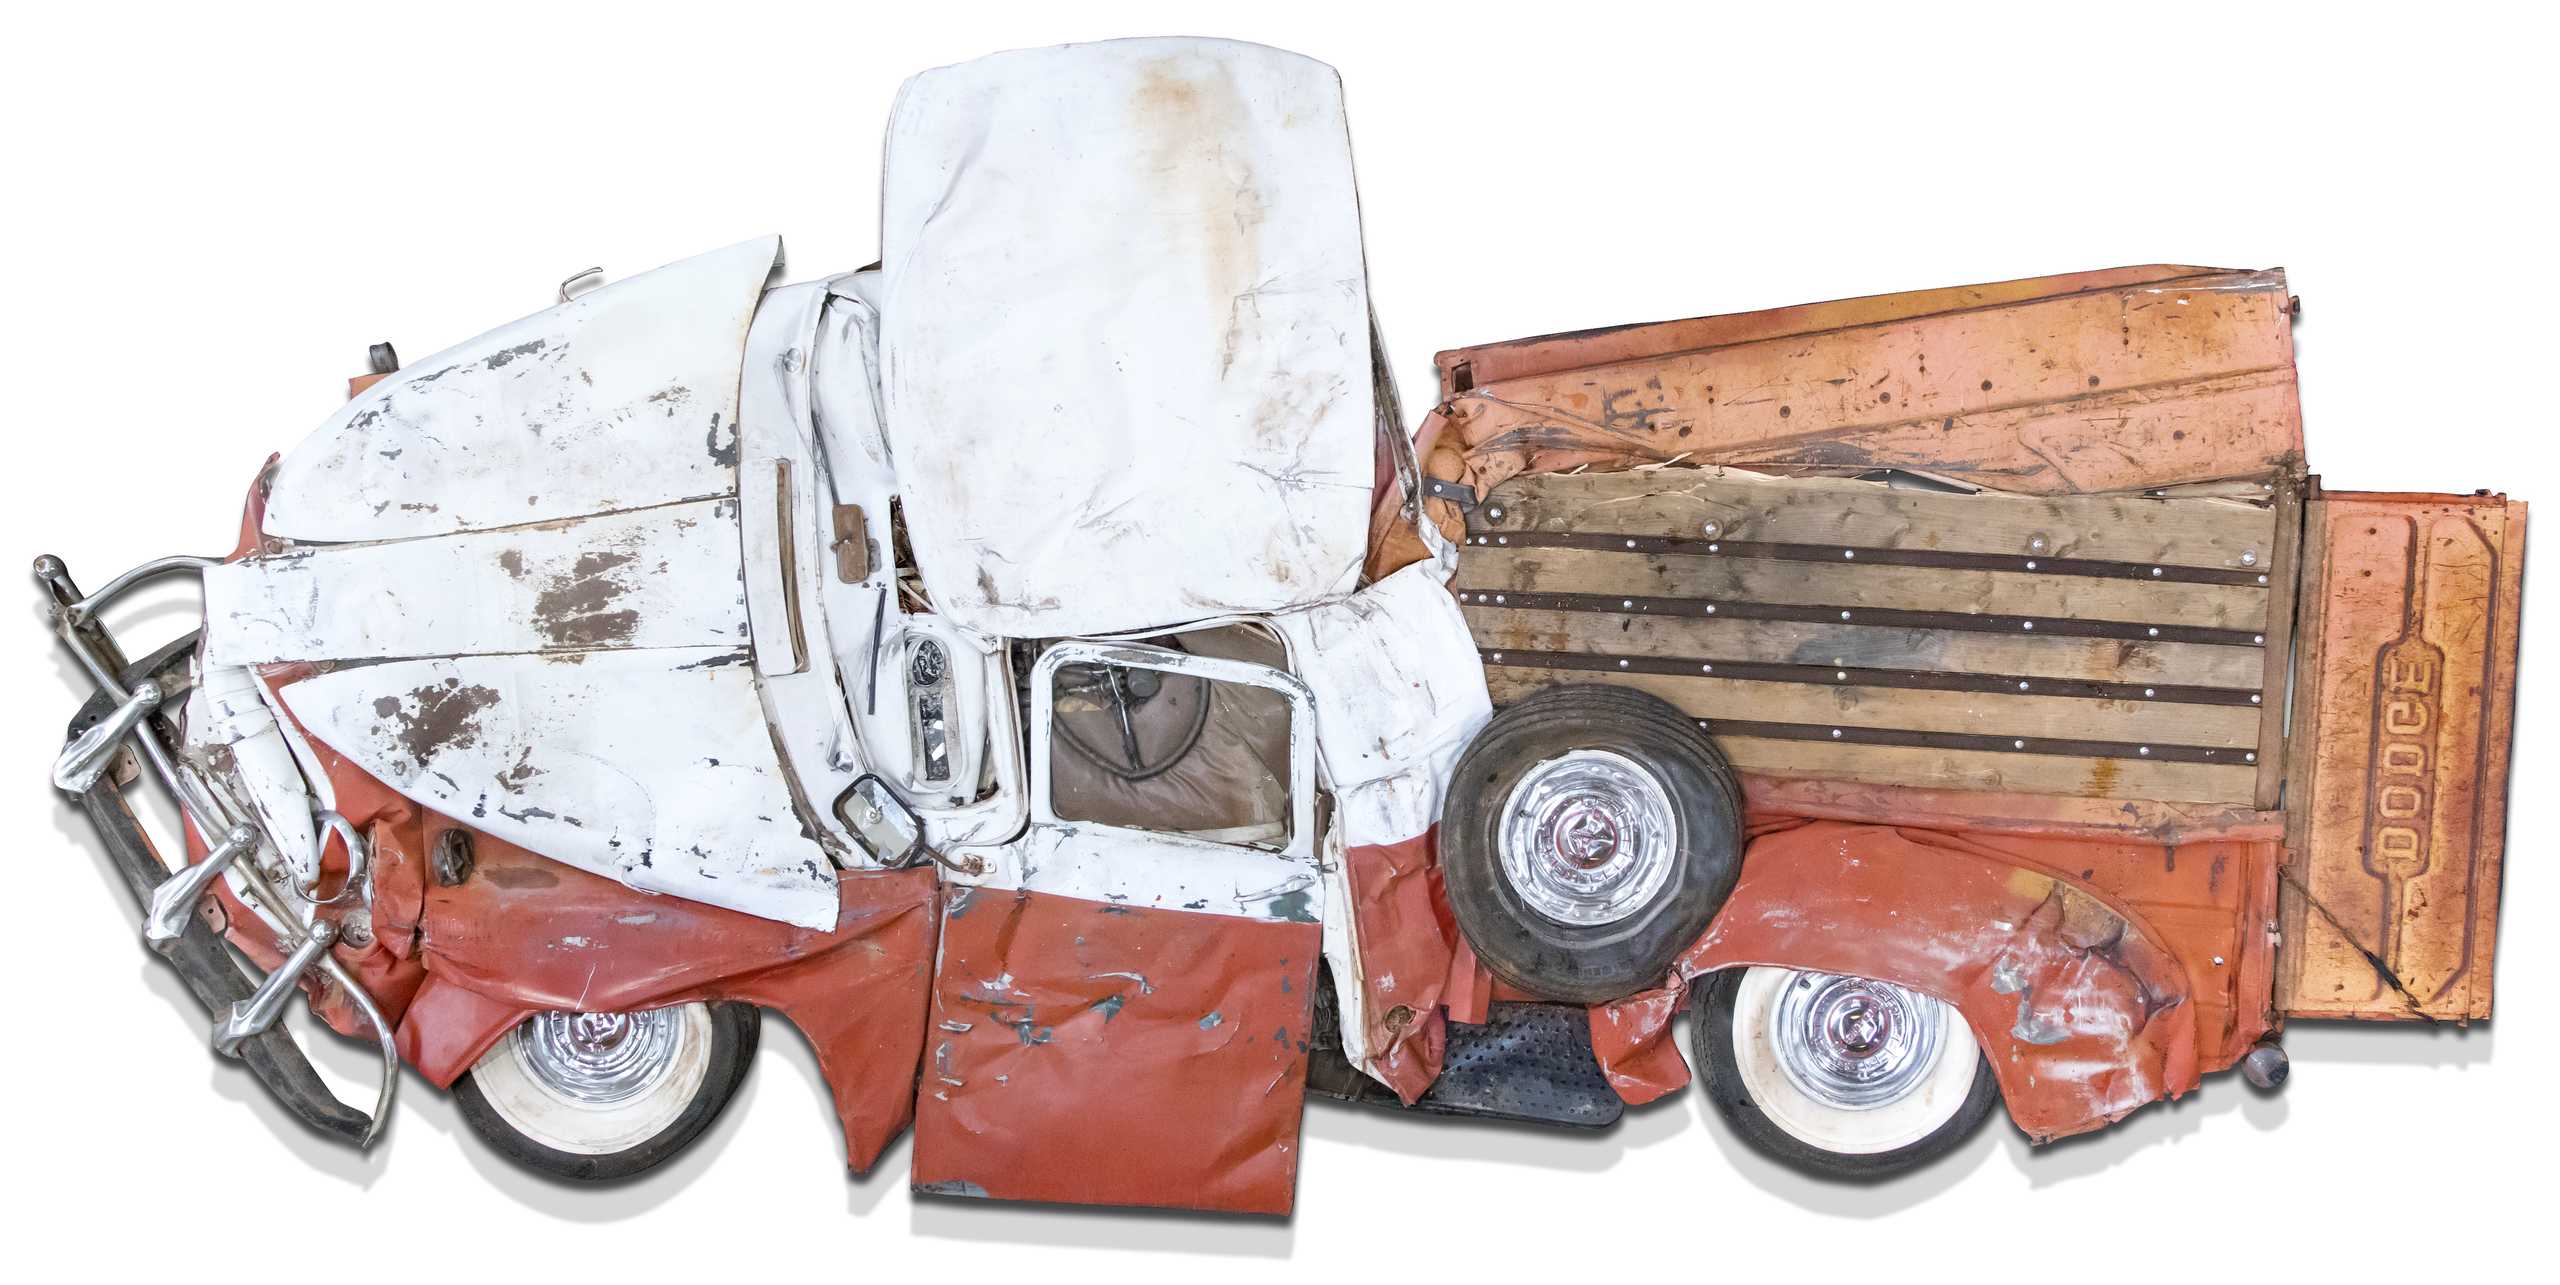 Dodge Stepside Pickup_Ron Arad_Metal, plastic and rubber_1956-2018